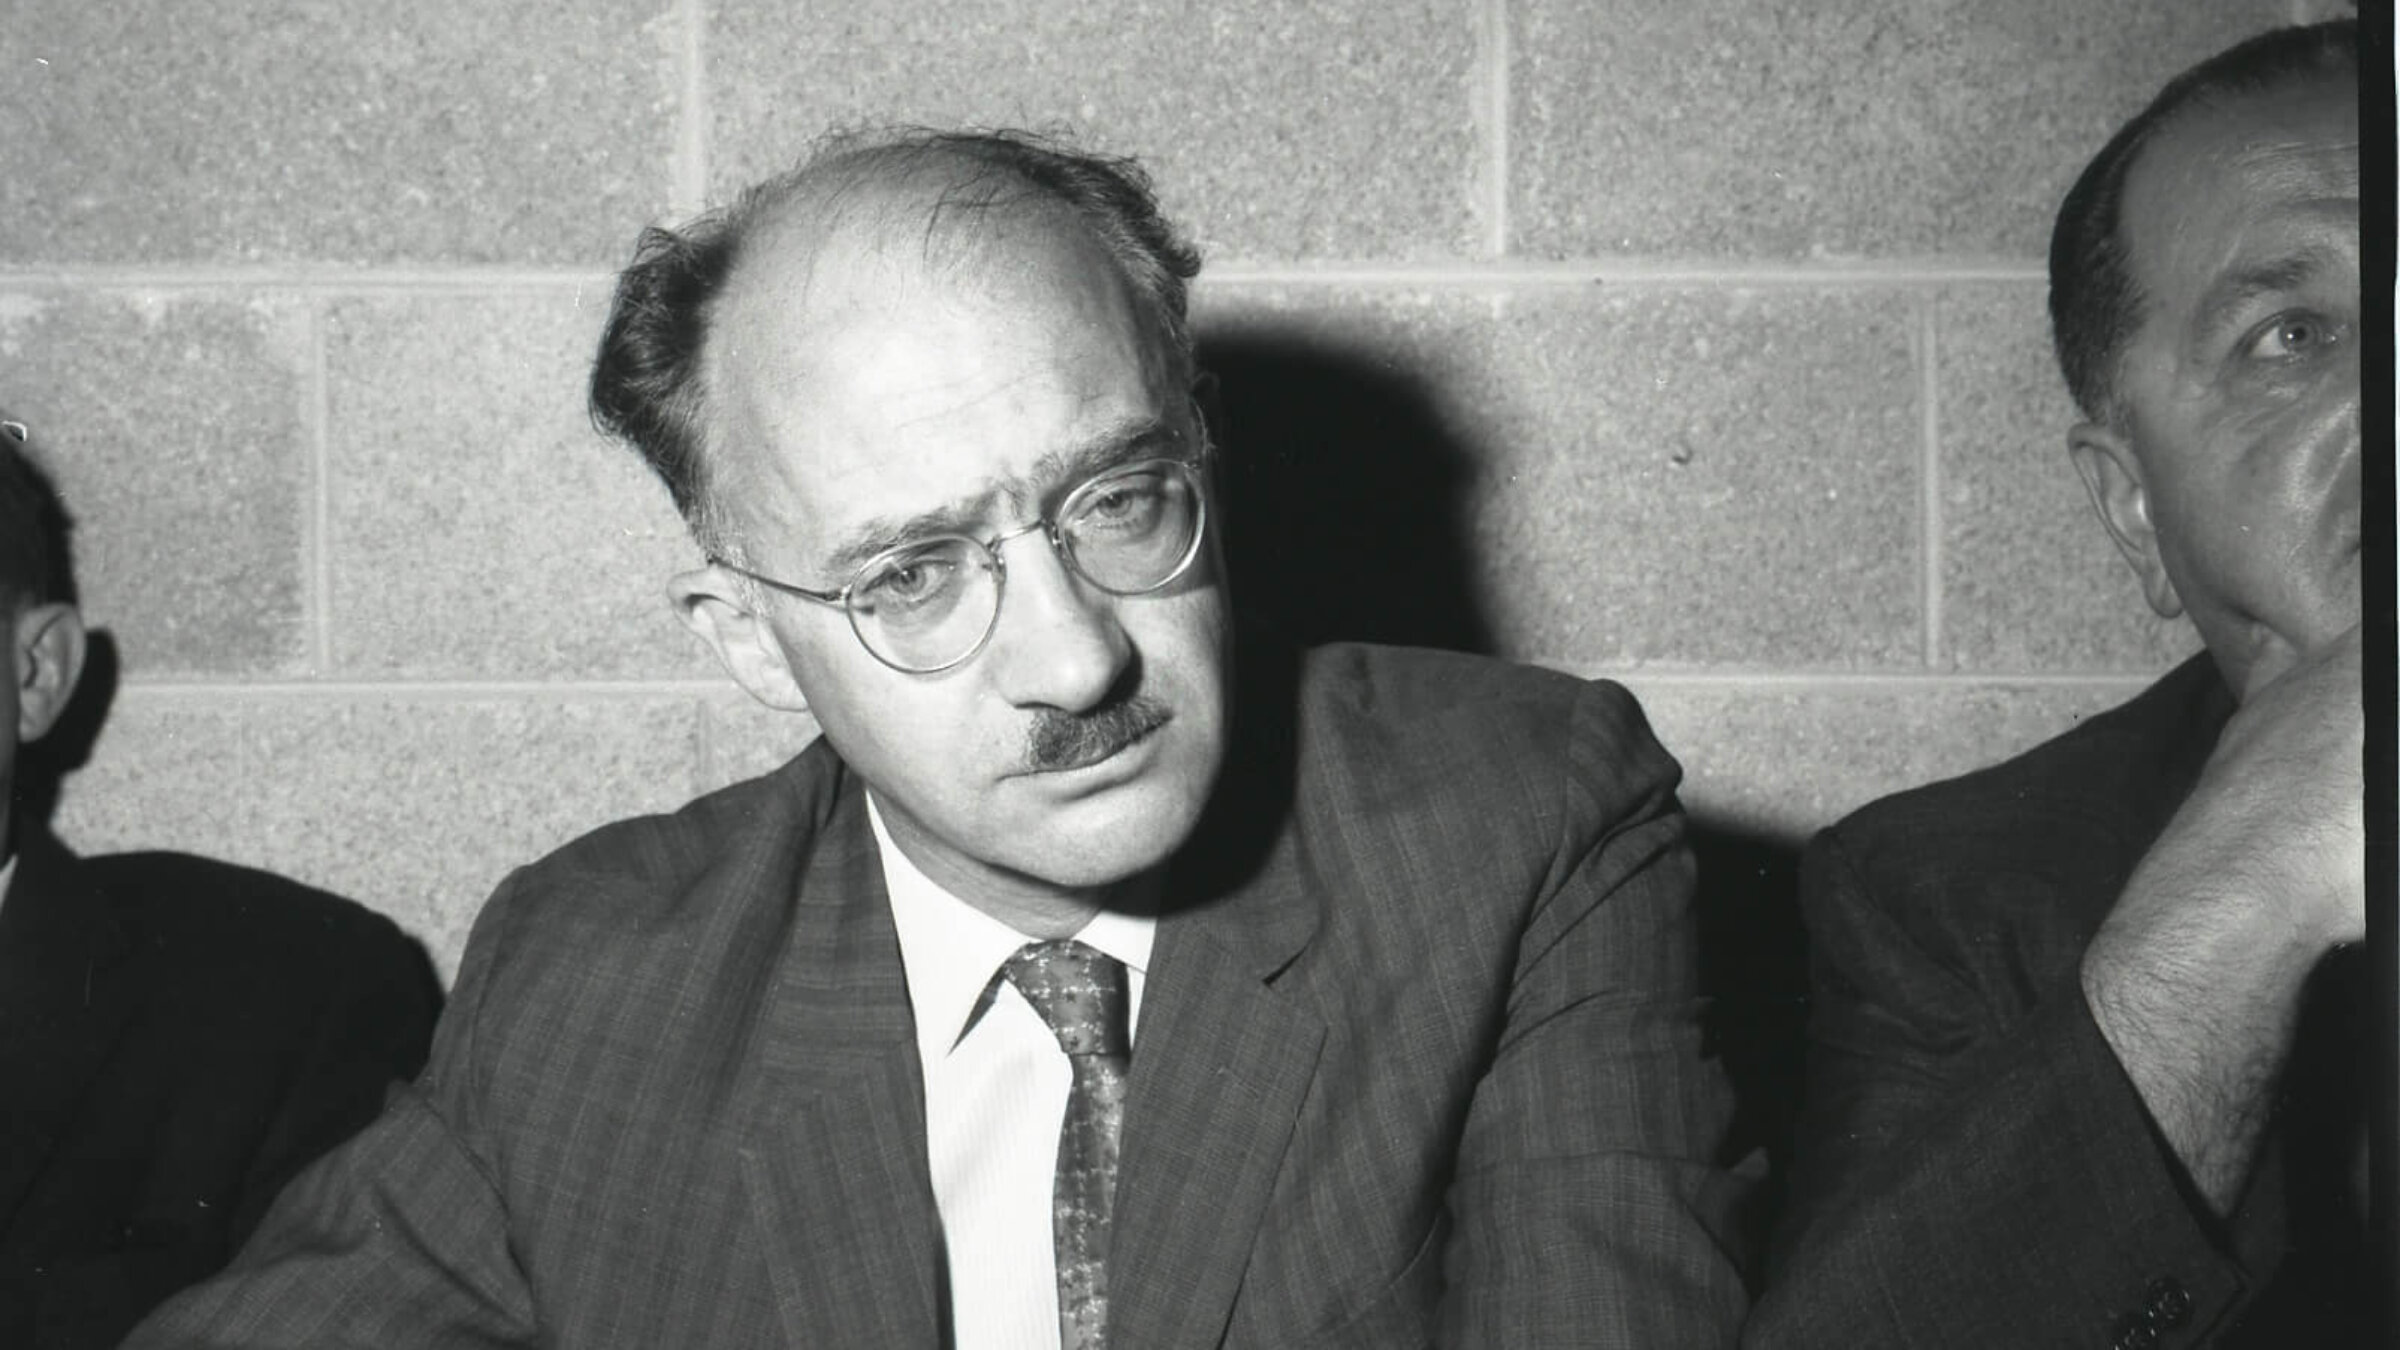 The Yiddish poet and Vilna partisan, Abraham (Avrom) Sutzkever in 1962